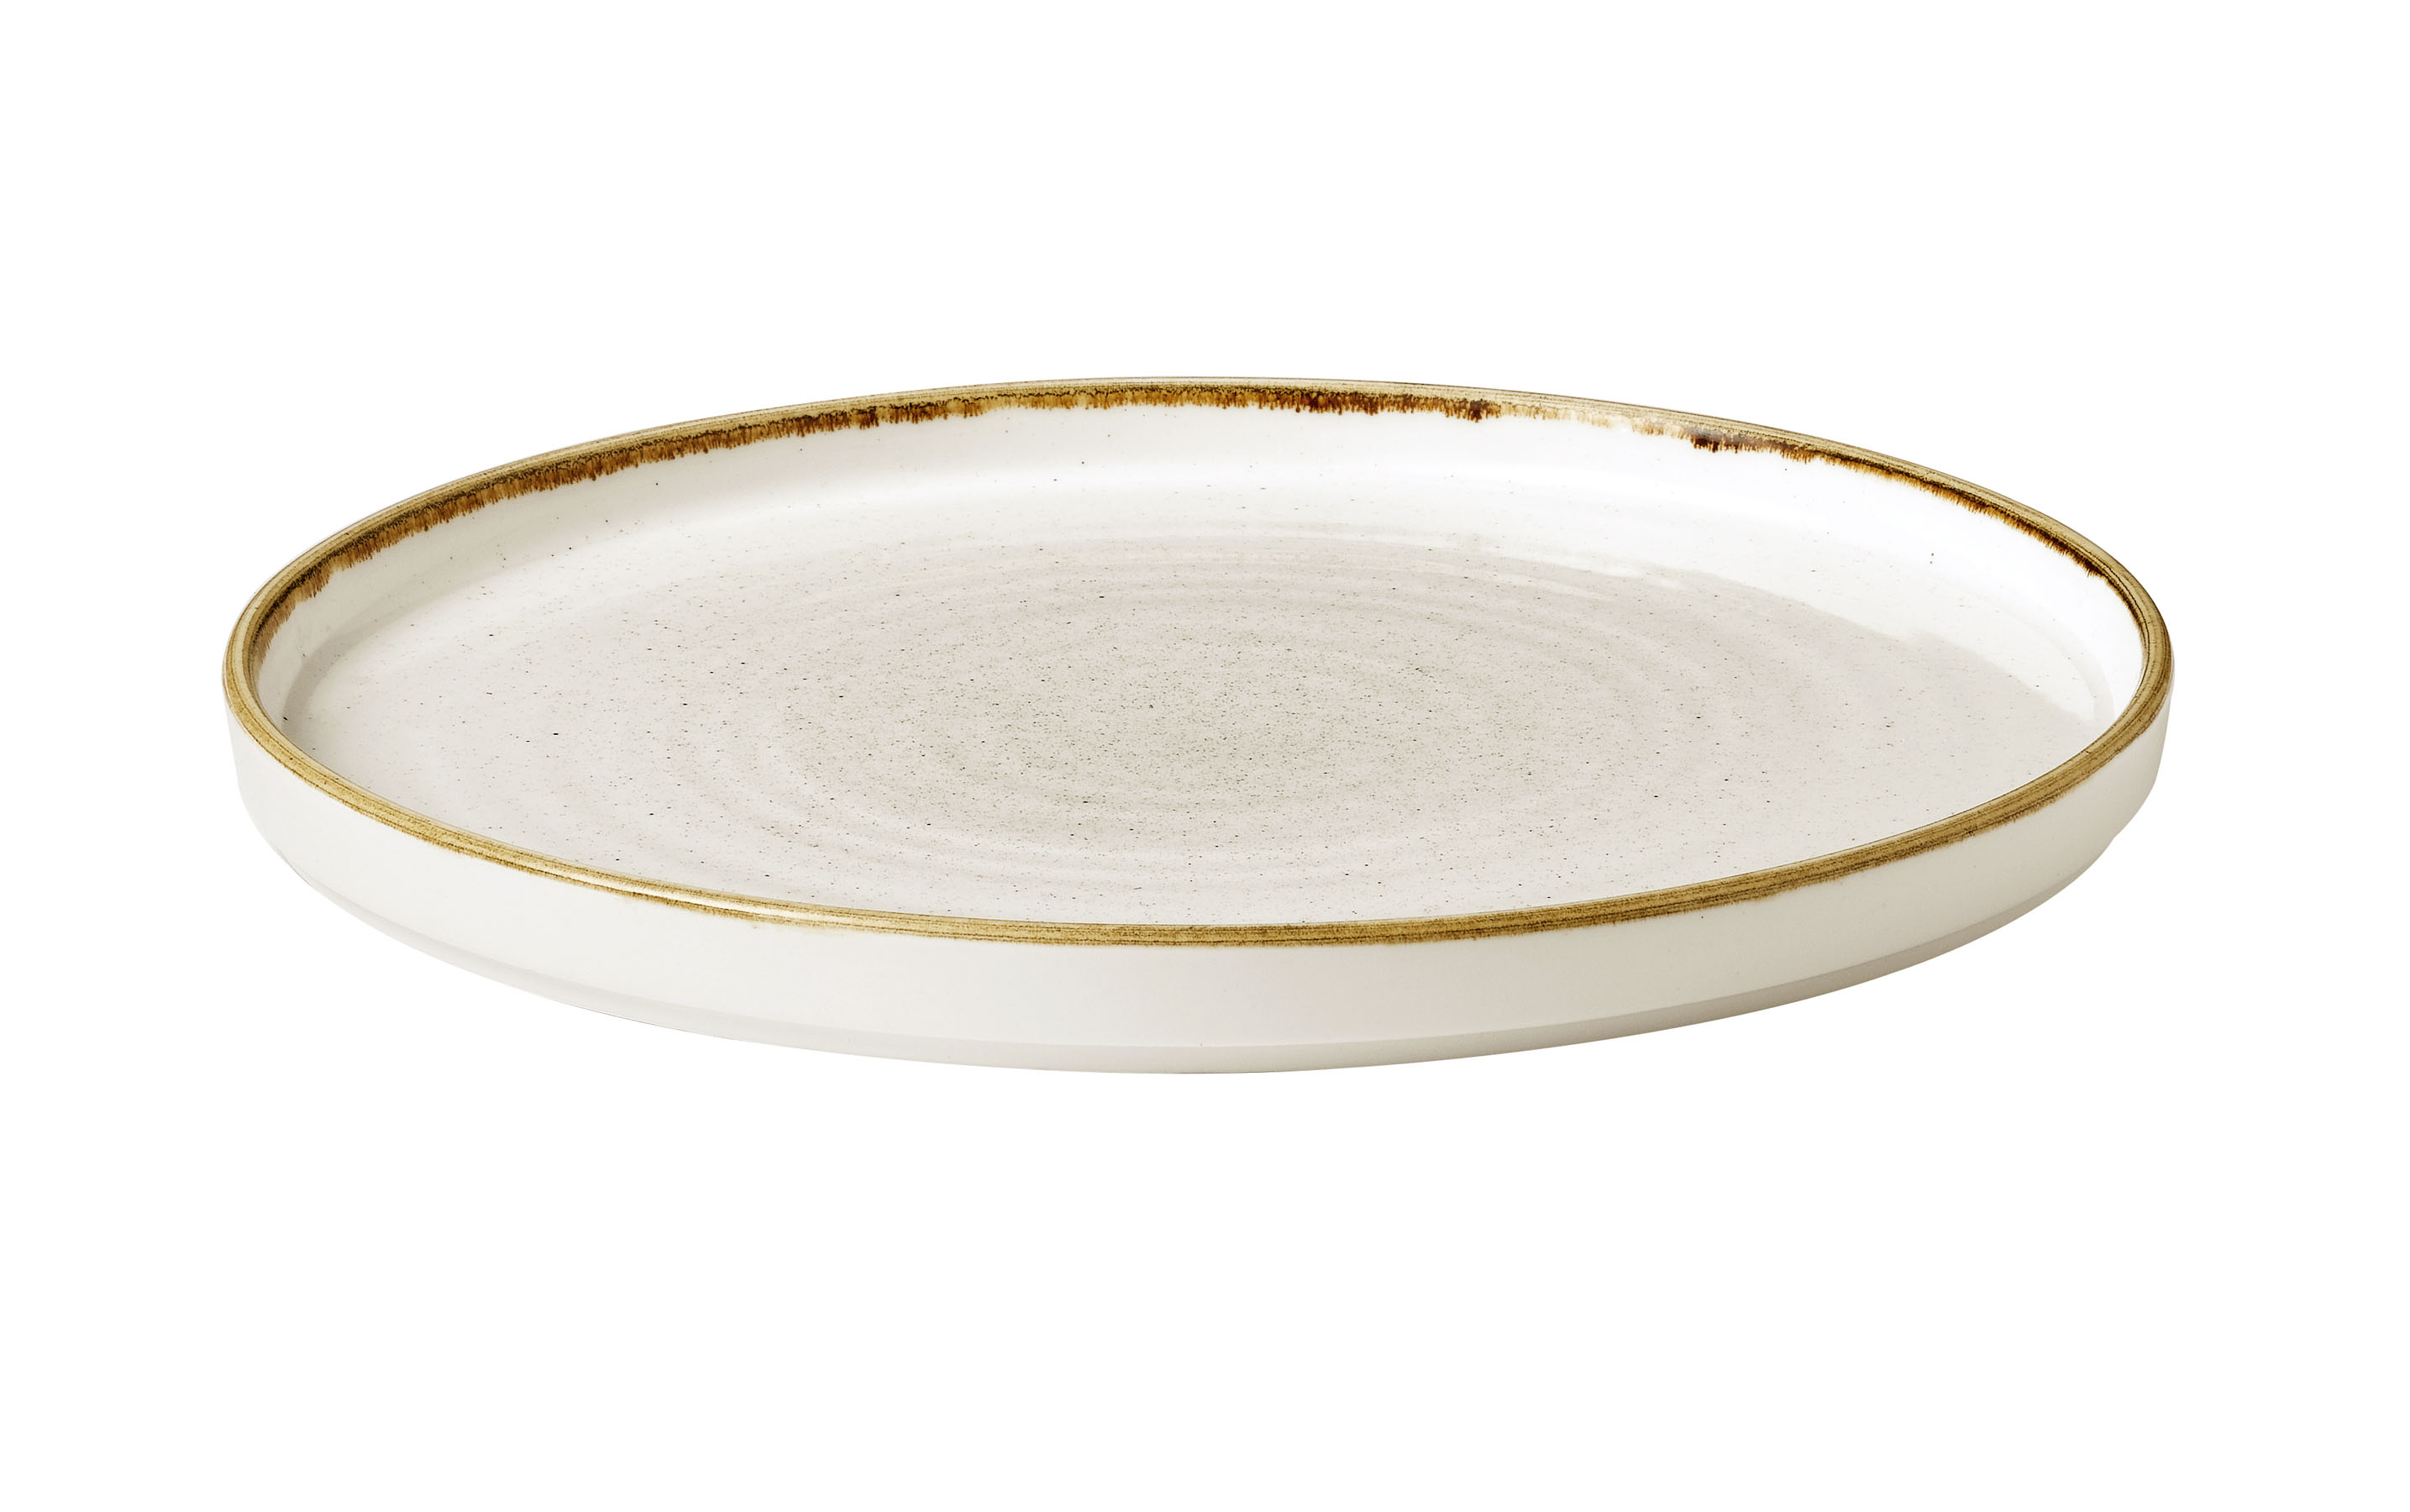 Churchill STONECAST Coupe Plate Teller Barley White Porzellan 26 cm weiß 